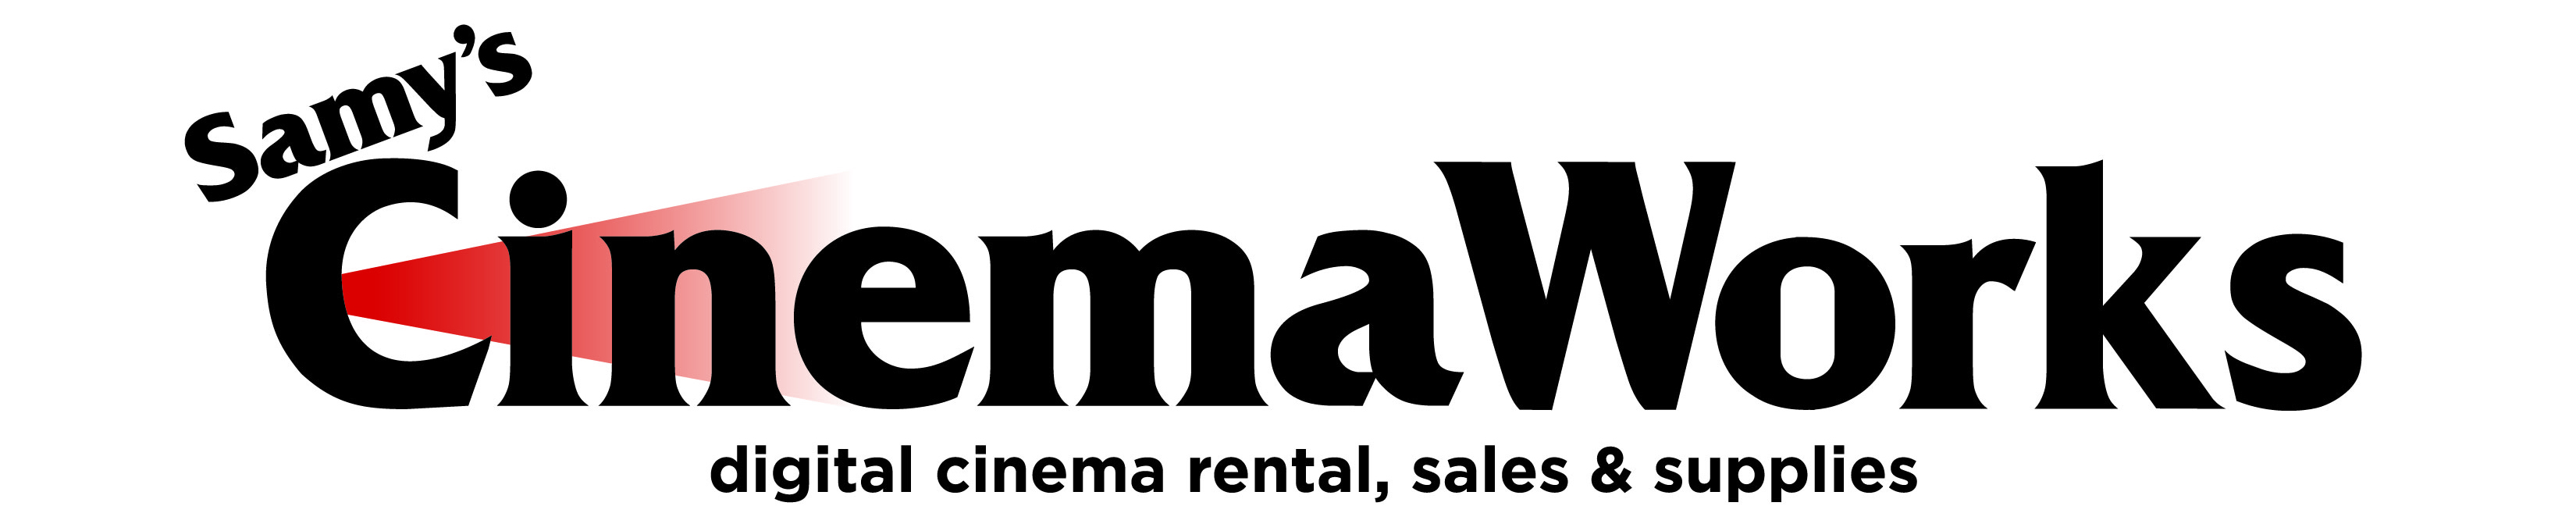 SamysCamera_CinemaWorks_Logo-02.jpg?mtime=20181026151712#asset:67266